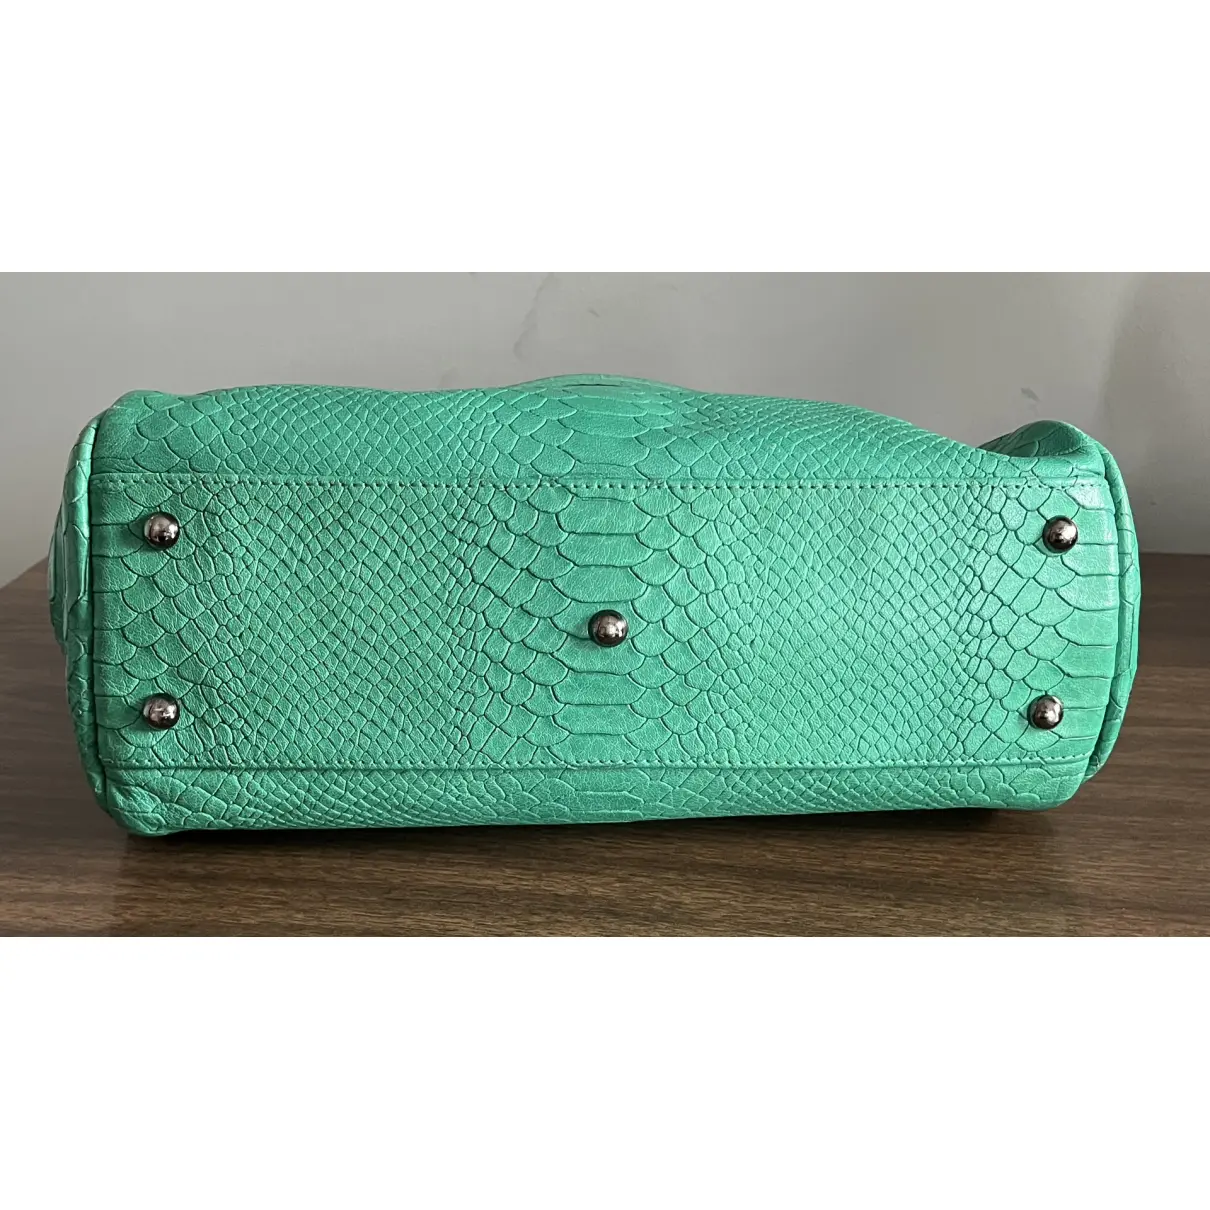 Gatsby leather handbag Longchamp